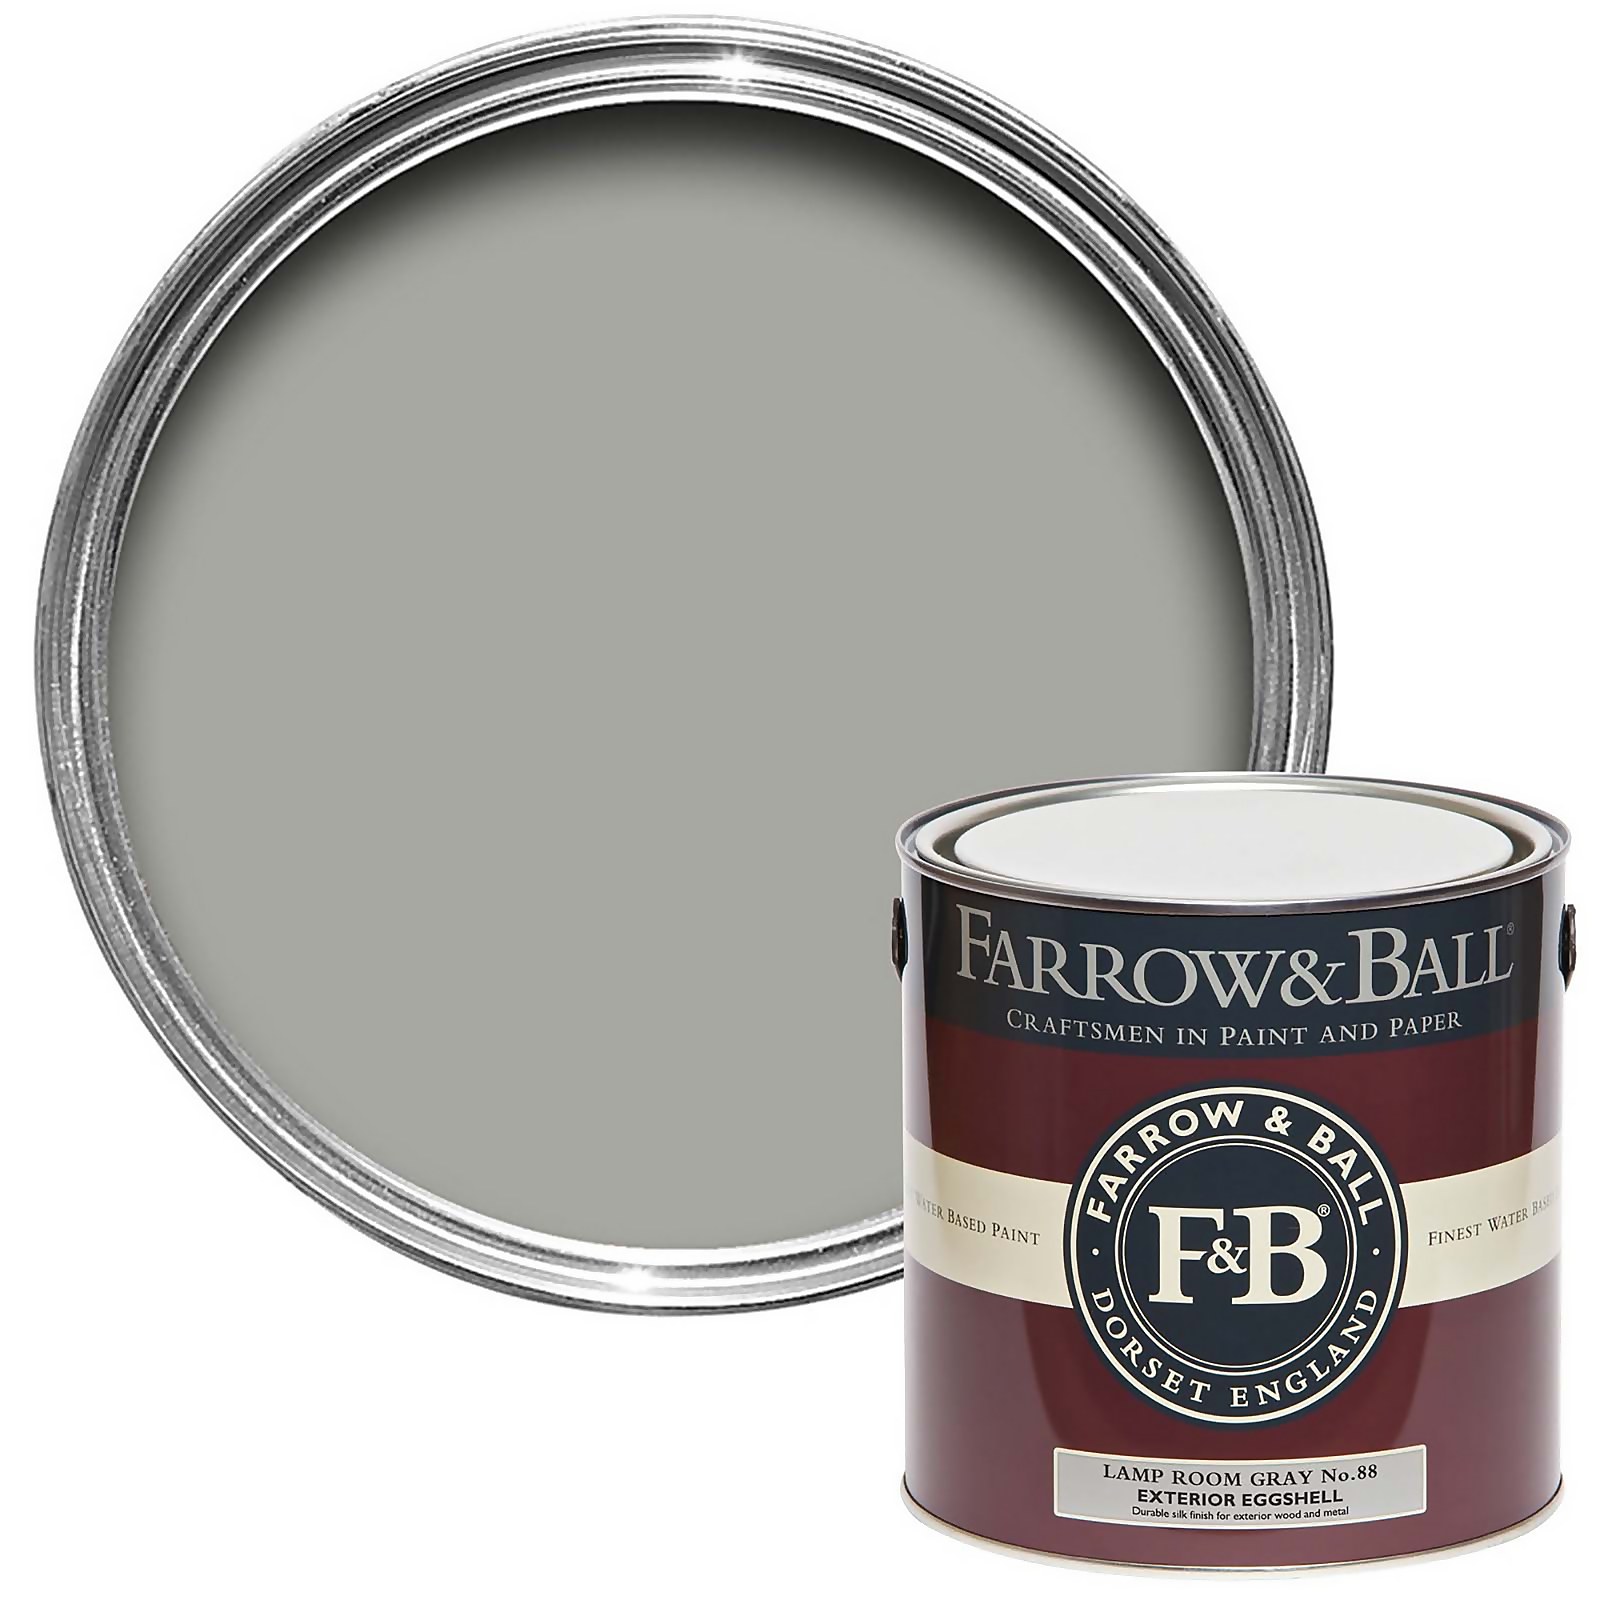 Farrow & Ball Exterior Eggshell Paint Lamp Room Gray No.88 - 2.5L